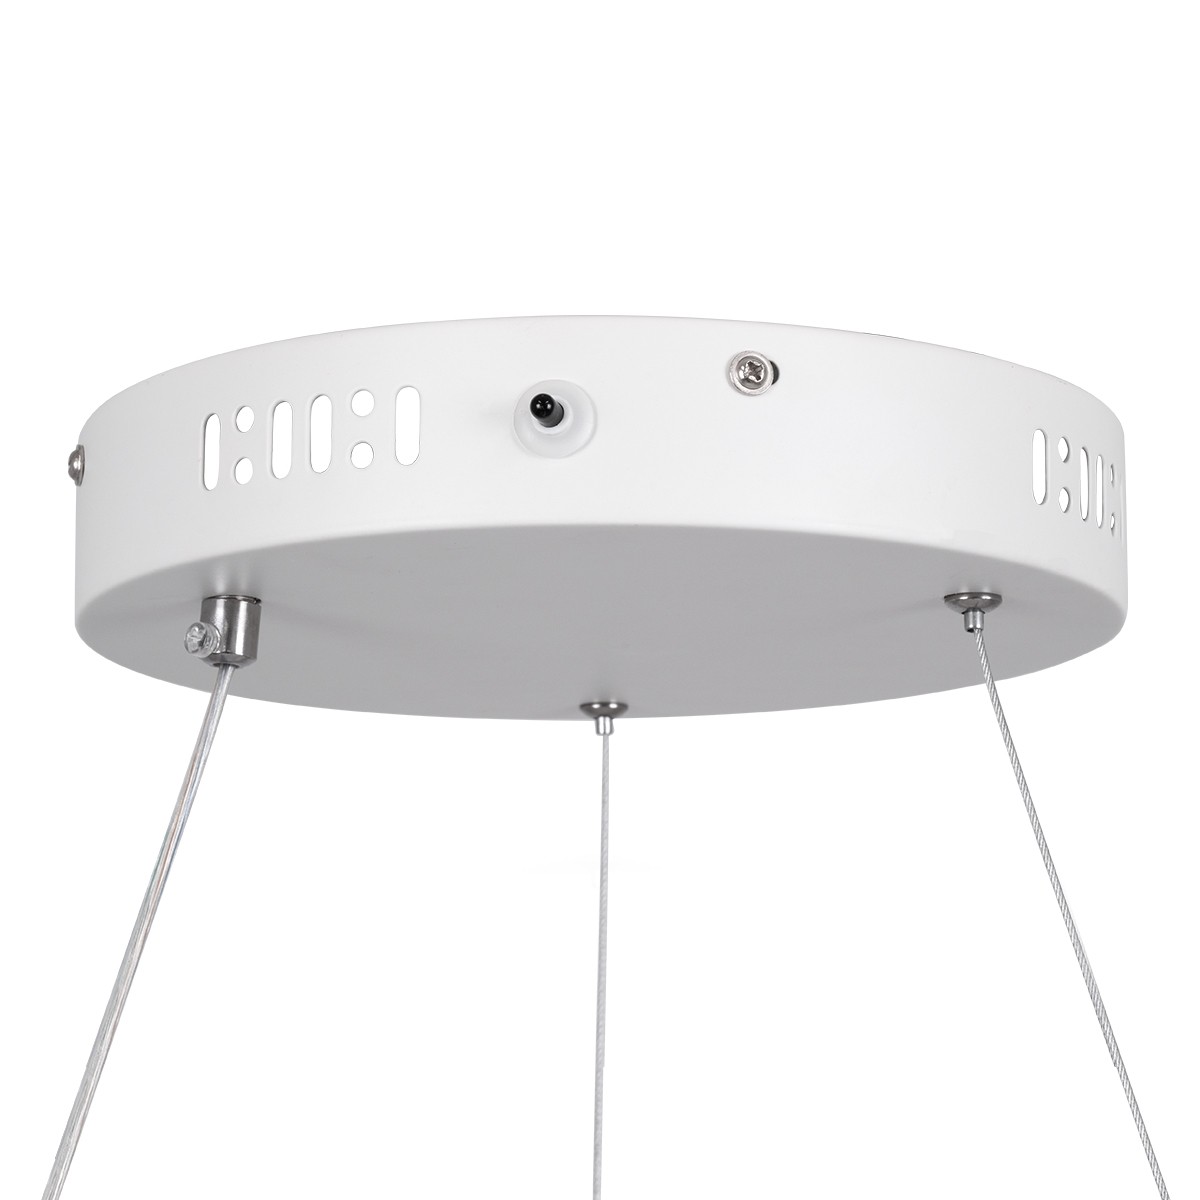 LED Κρεμαστό Φωτιστικό Οροφής NEMESIS 75W με Εναλλαγή Φωτισμού μέσω Τηλεχειριστηρίου Dimmable Φ100cm - Λευκό 61165